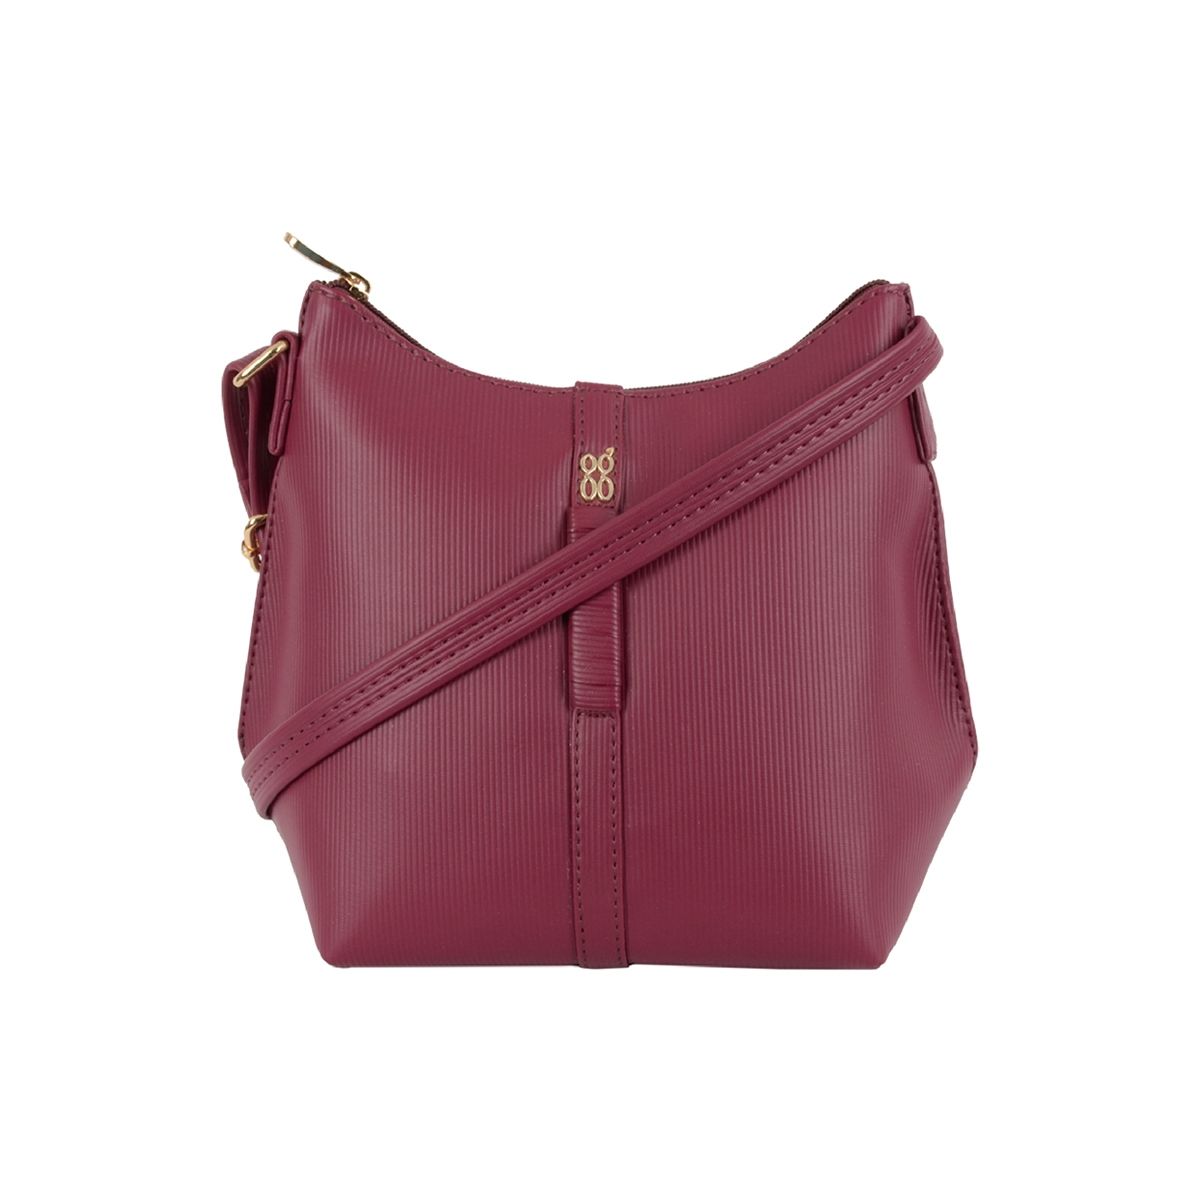 Buy Women Tan Shoulder Bag Online | SKU: 66-27-23-10-Metro Shoes